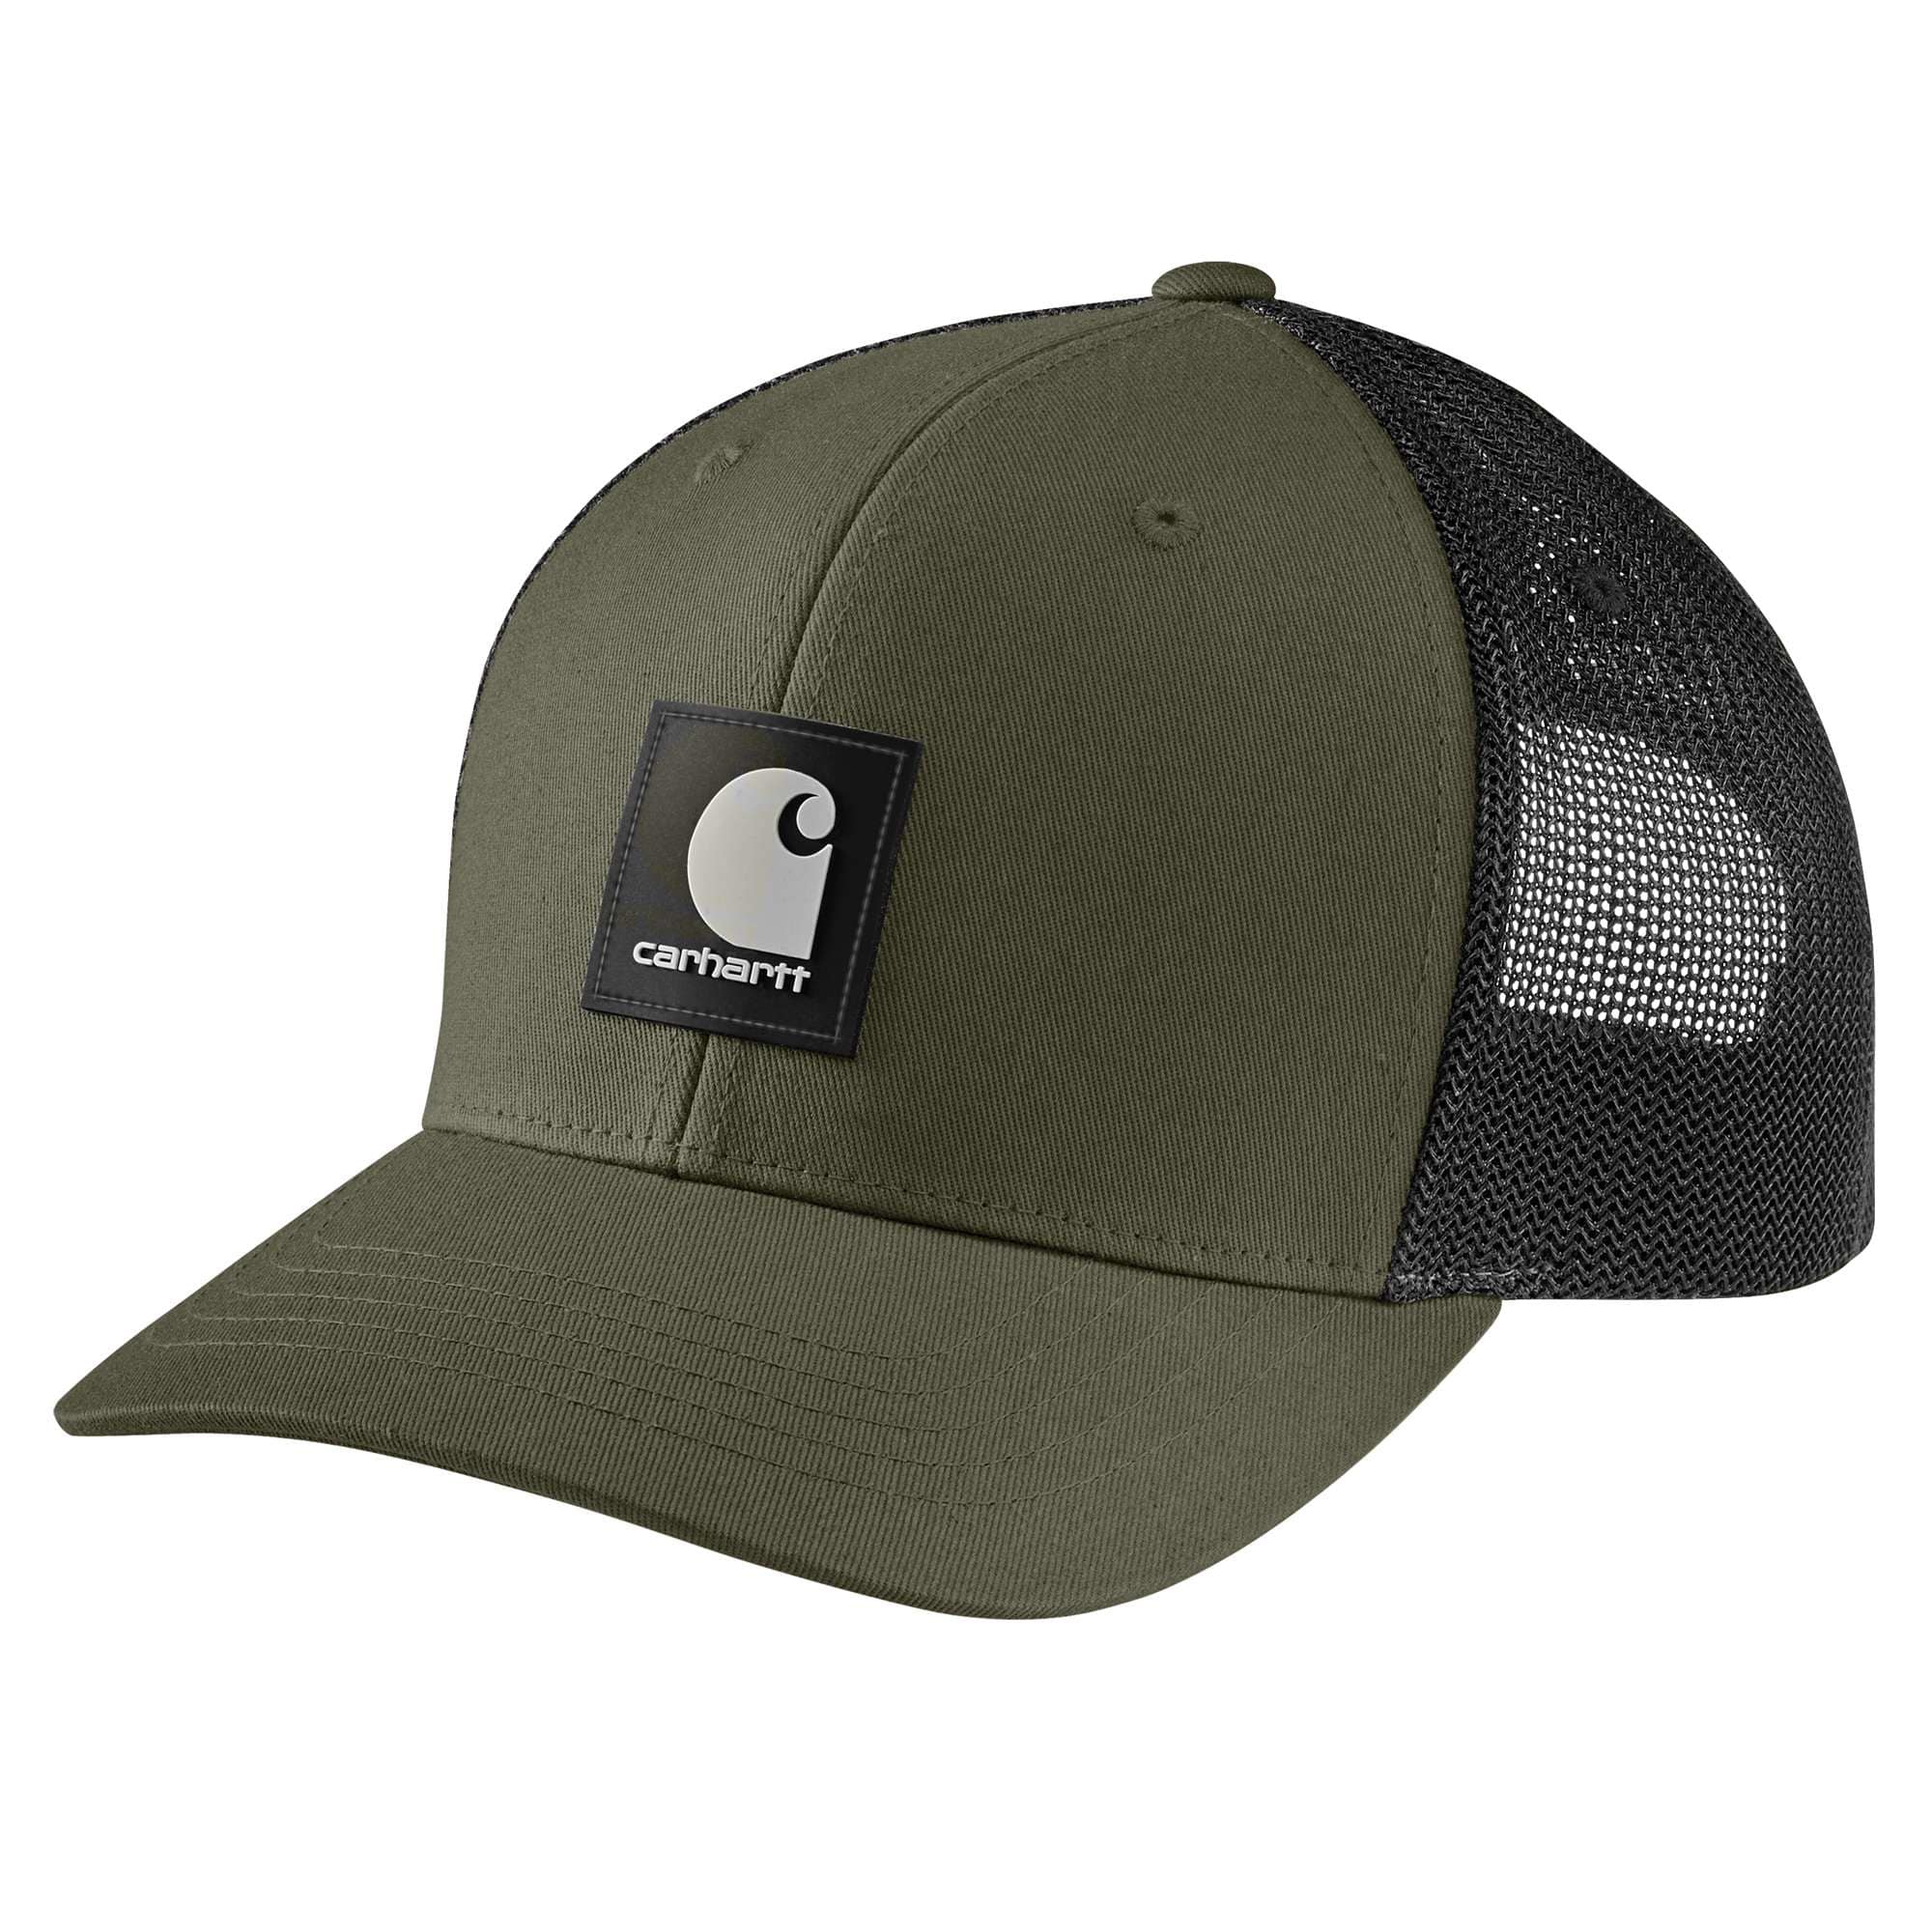 Men's Hats & Caps | Carhartt